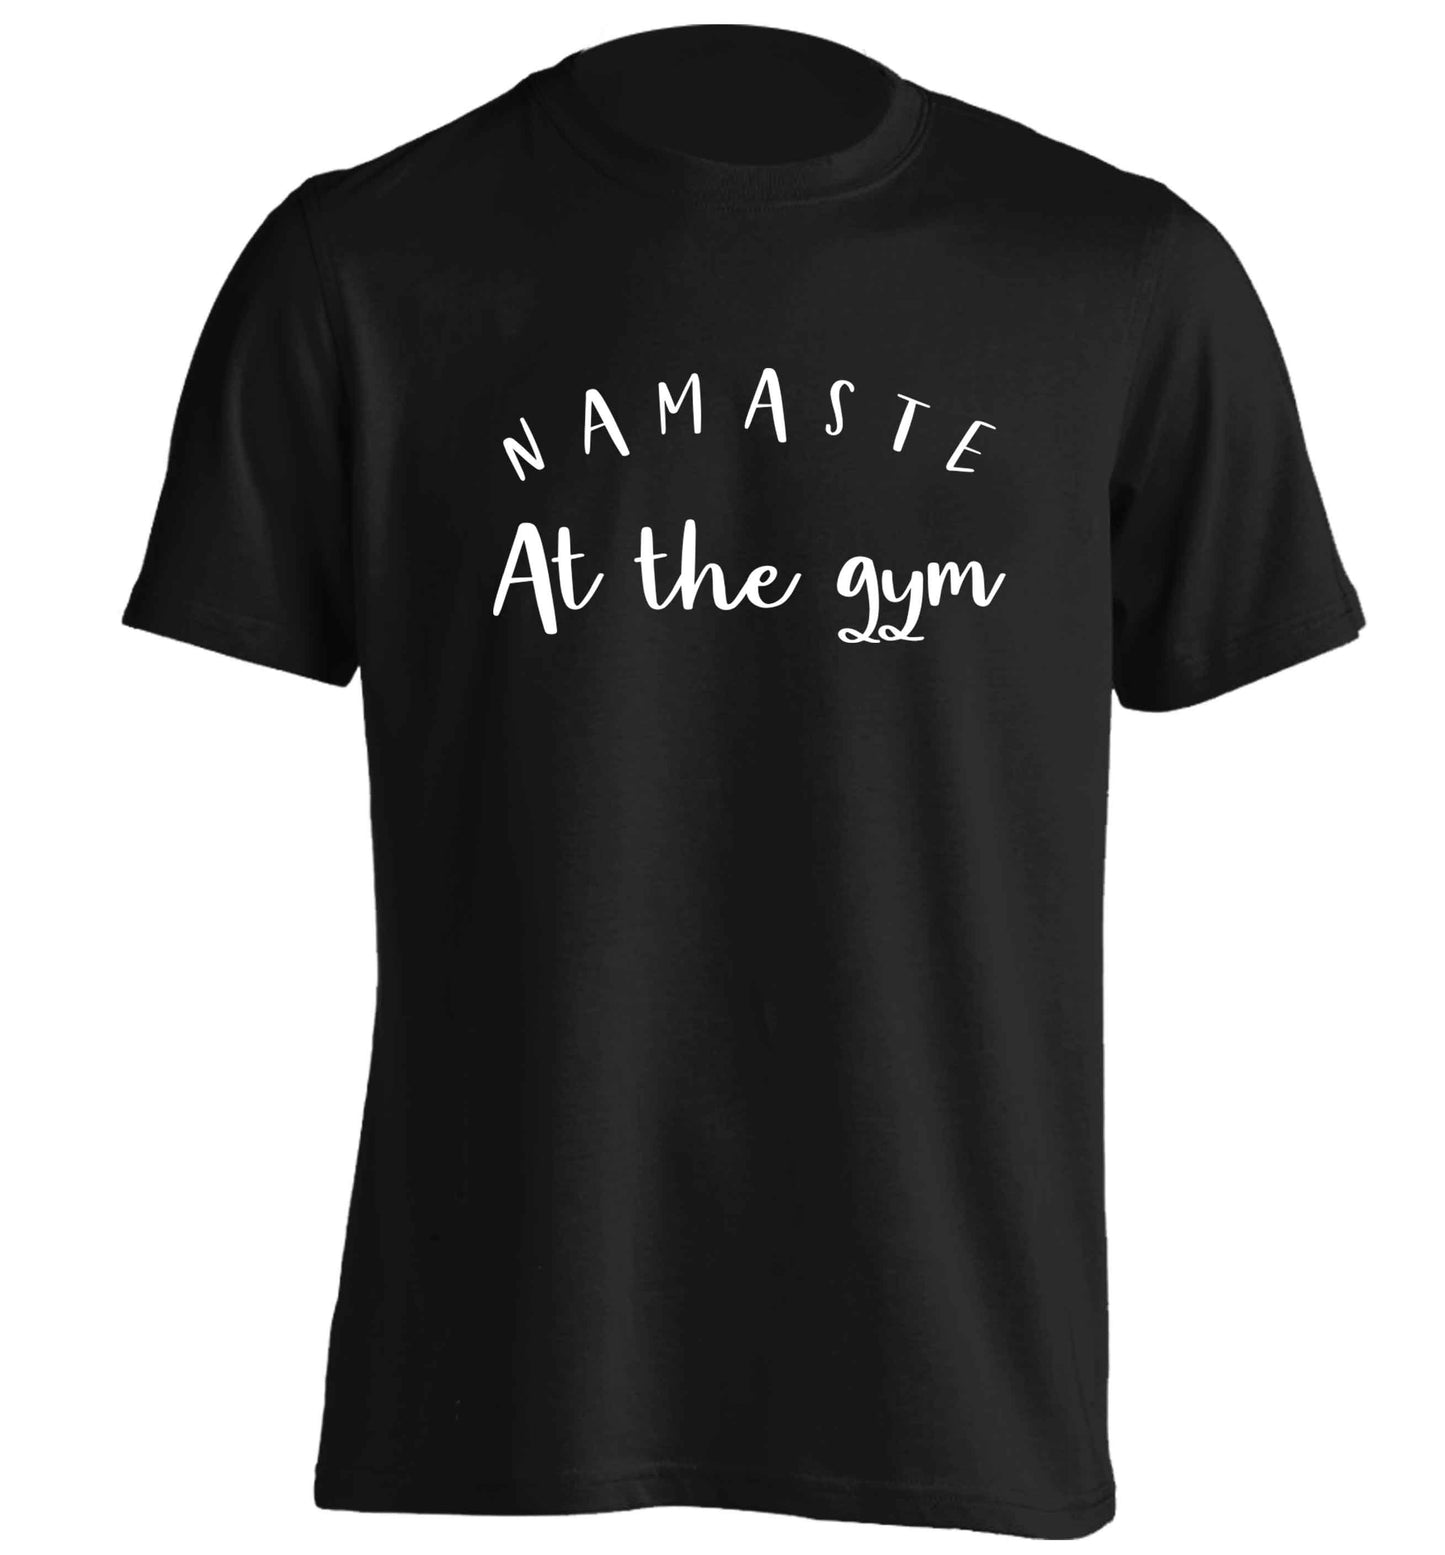 Namaste at the gym adults unisex black Tshirt 2XL